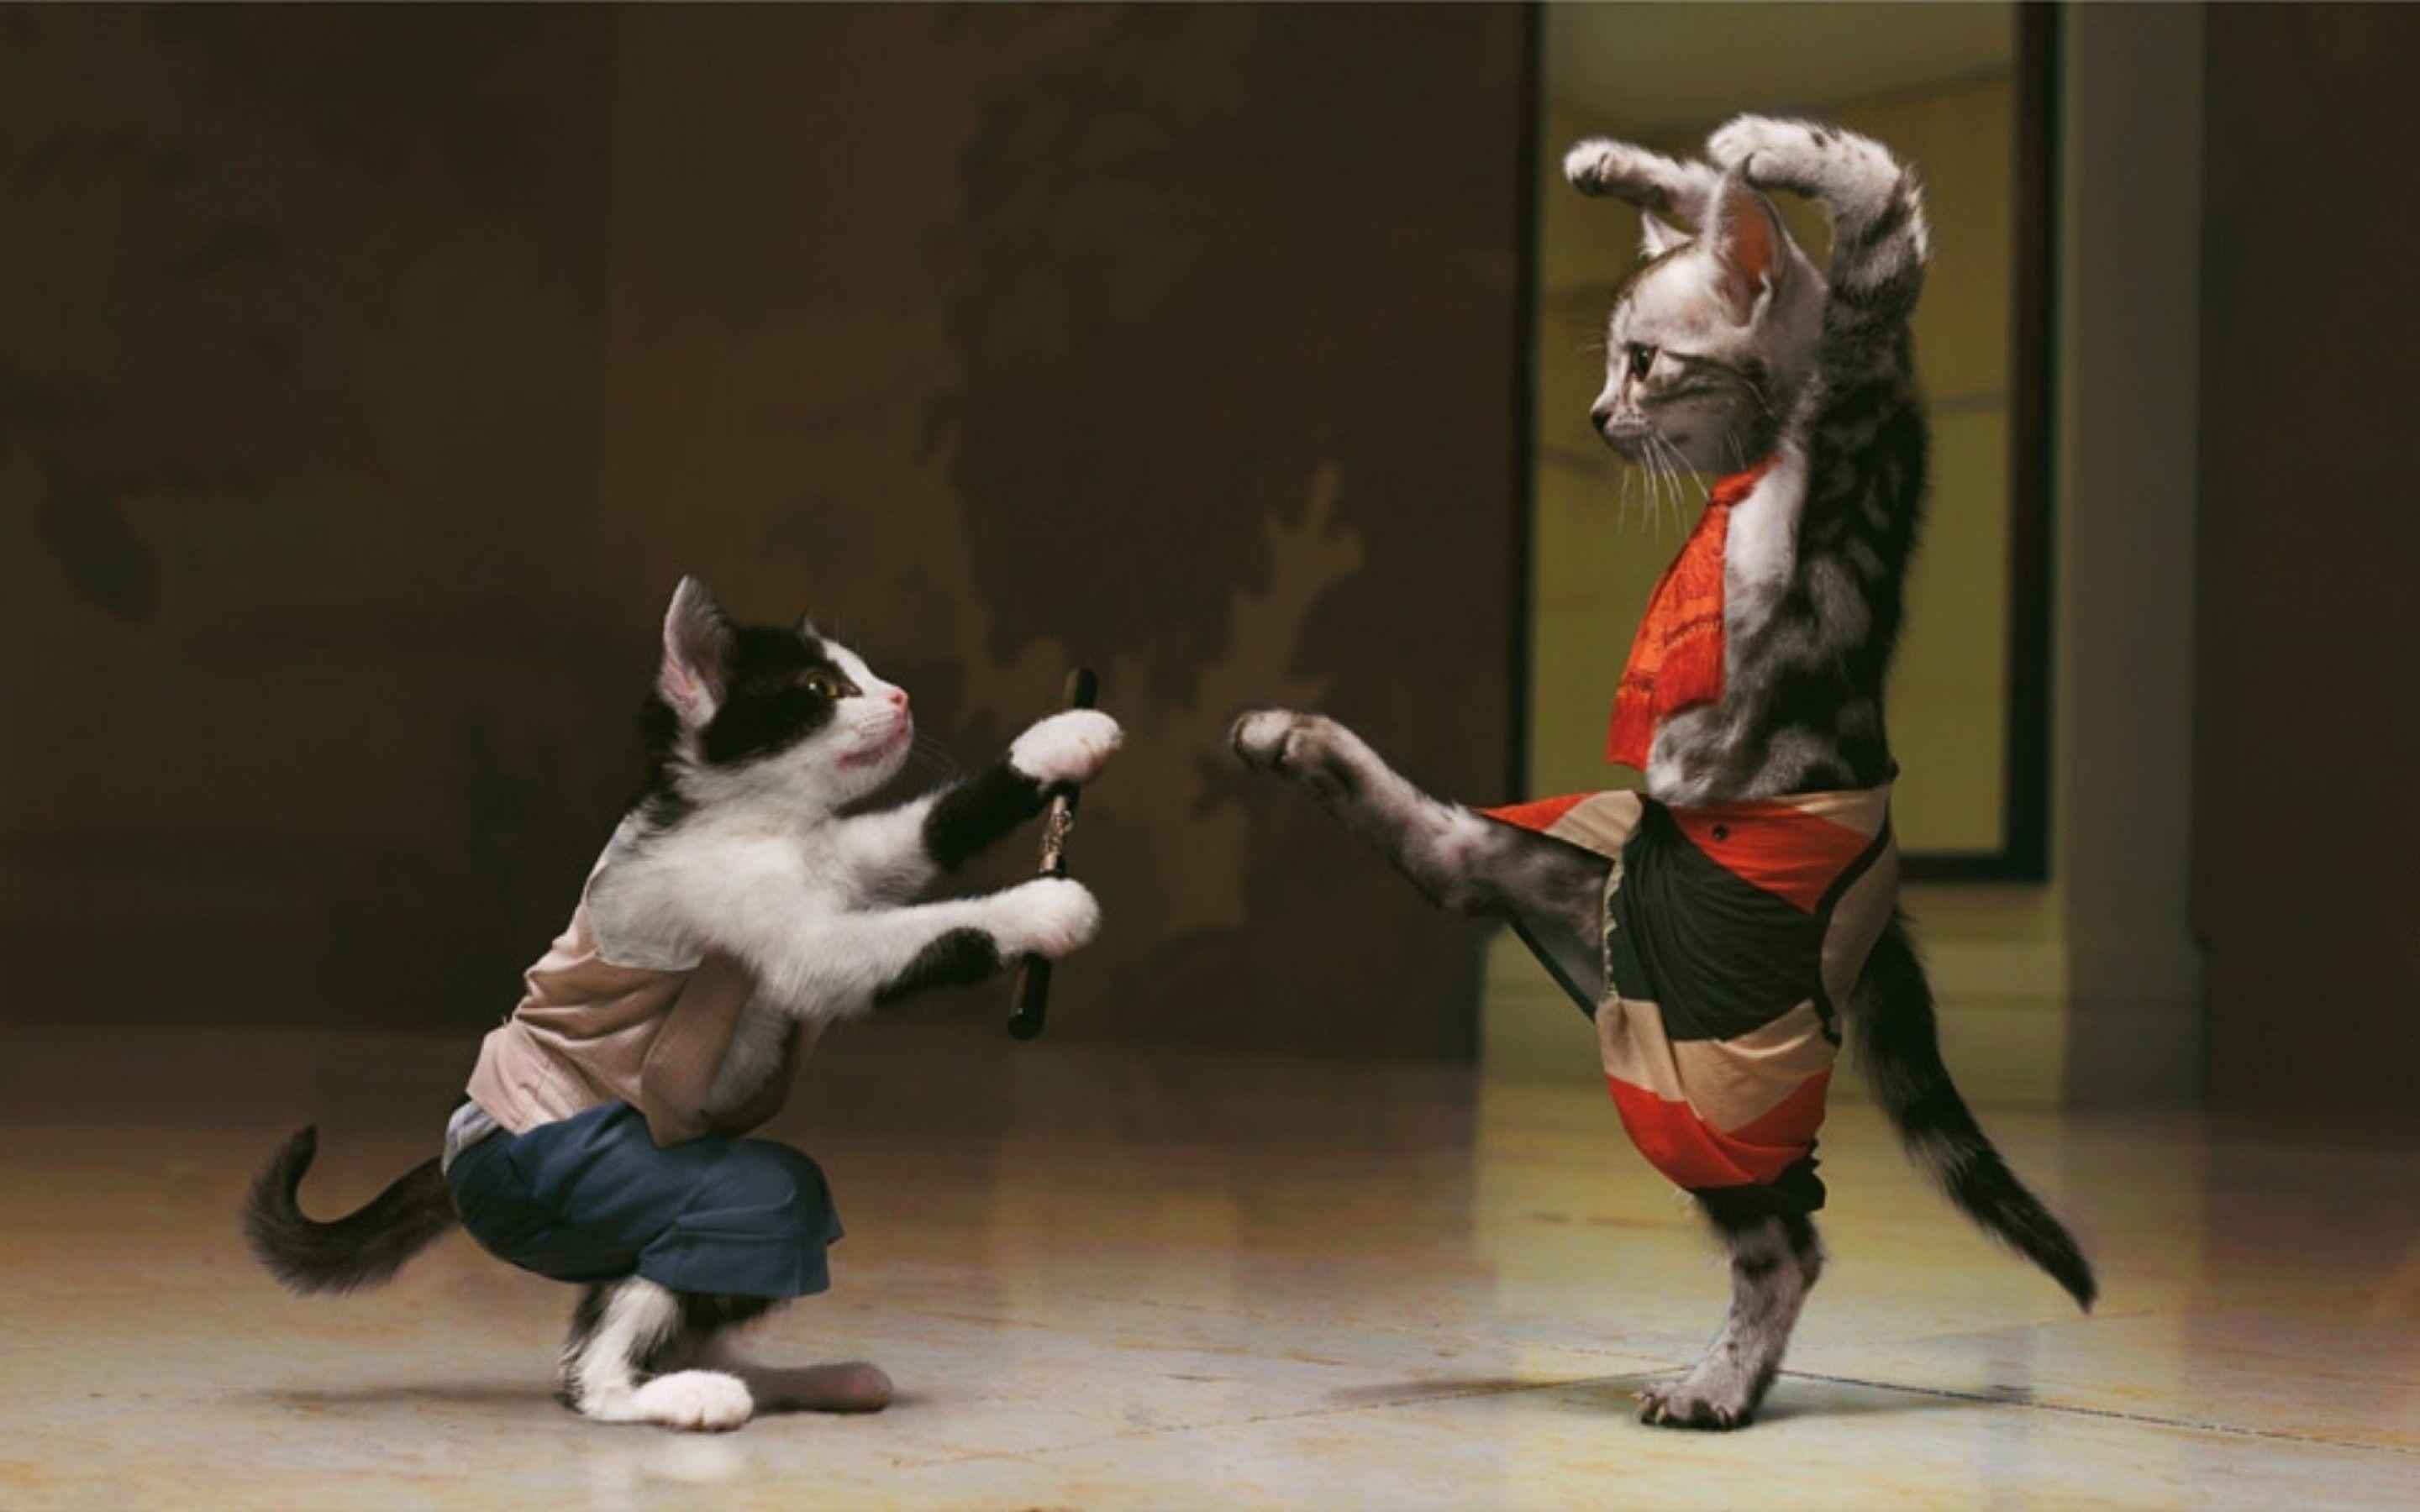 Funny Battle Cats Wallpaper Desktop Wallpaper. High